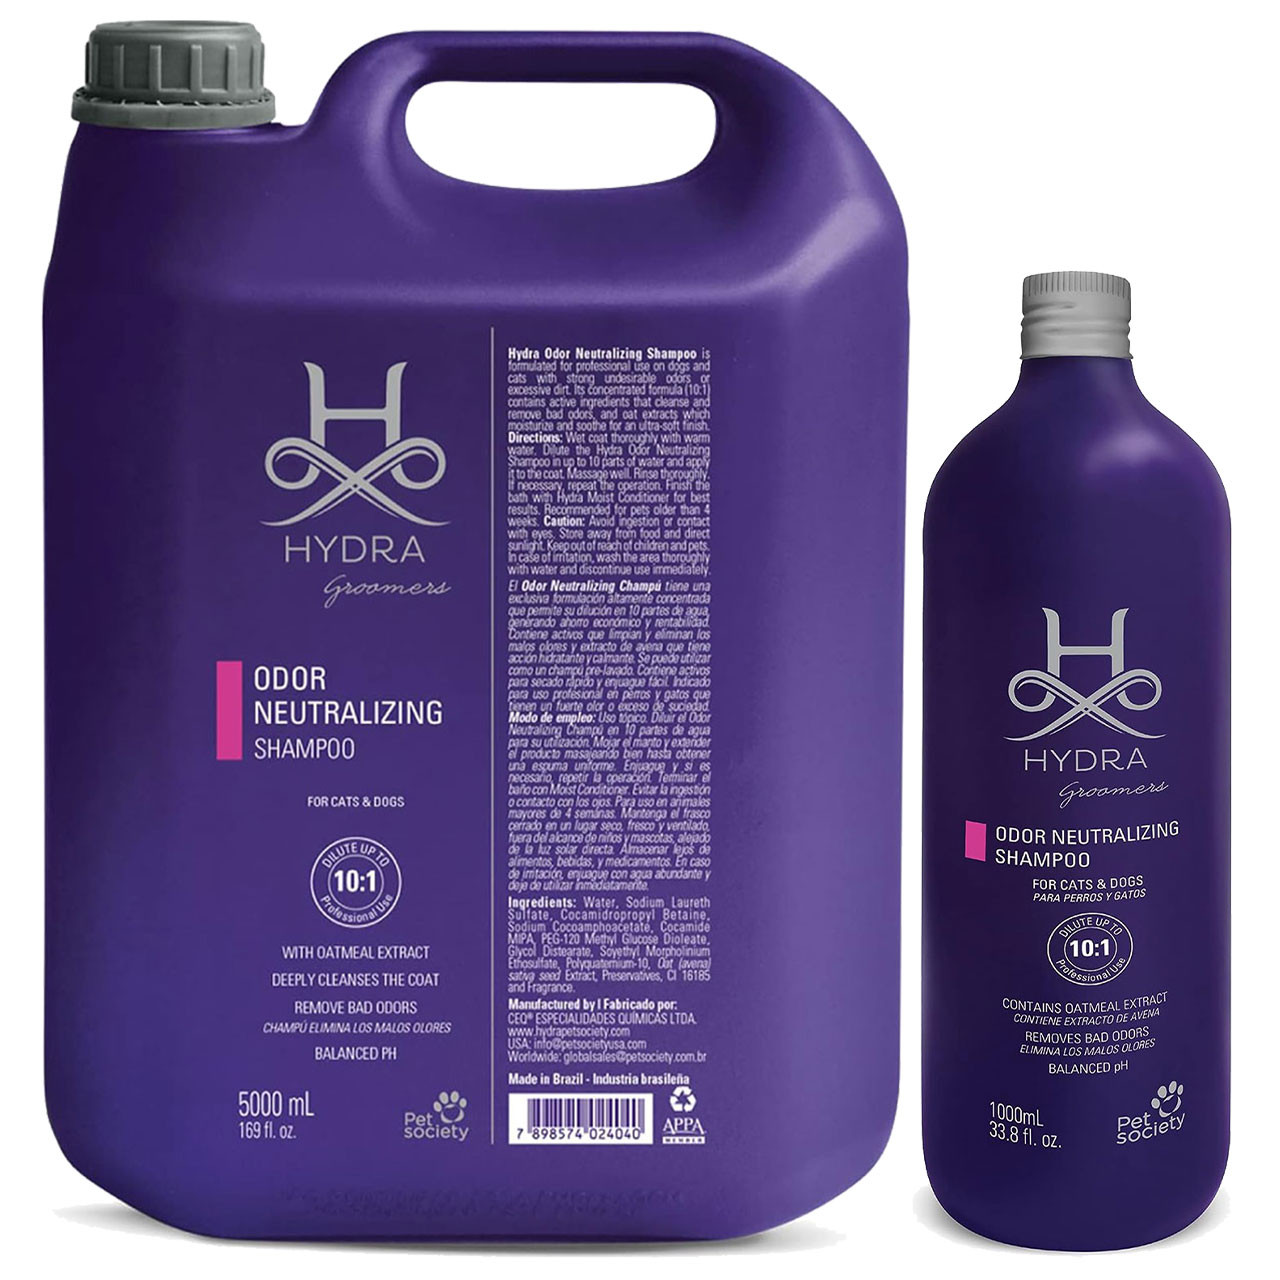 Hydra Odor Neutralizing Shampoo - Cherrybrook Pet Supplies